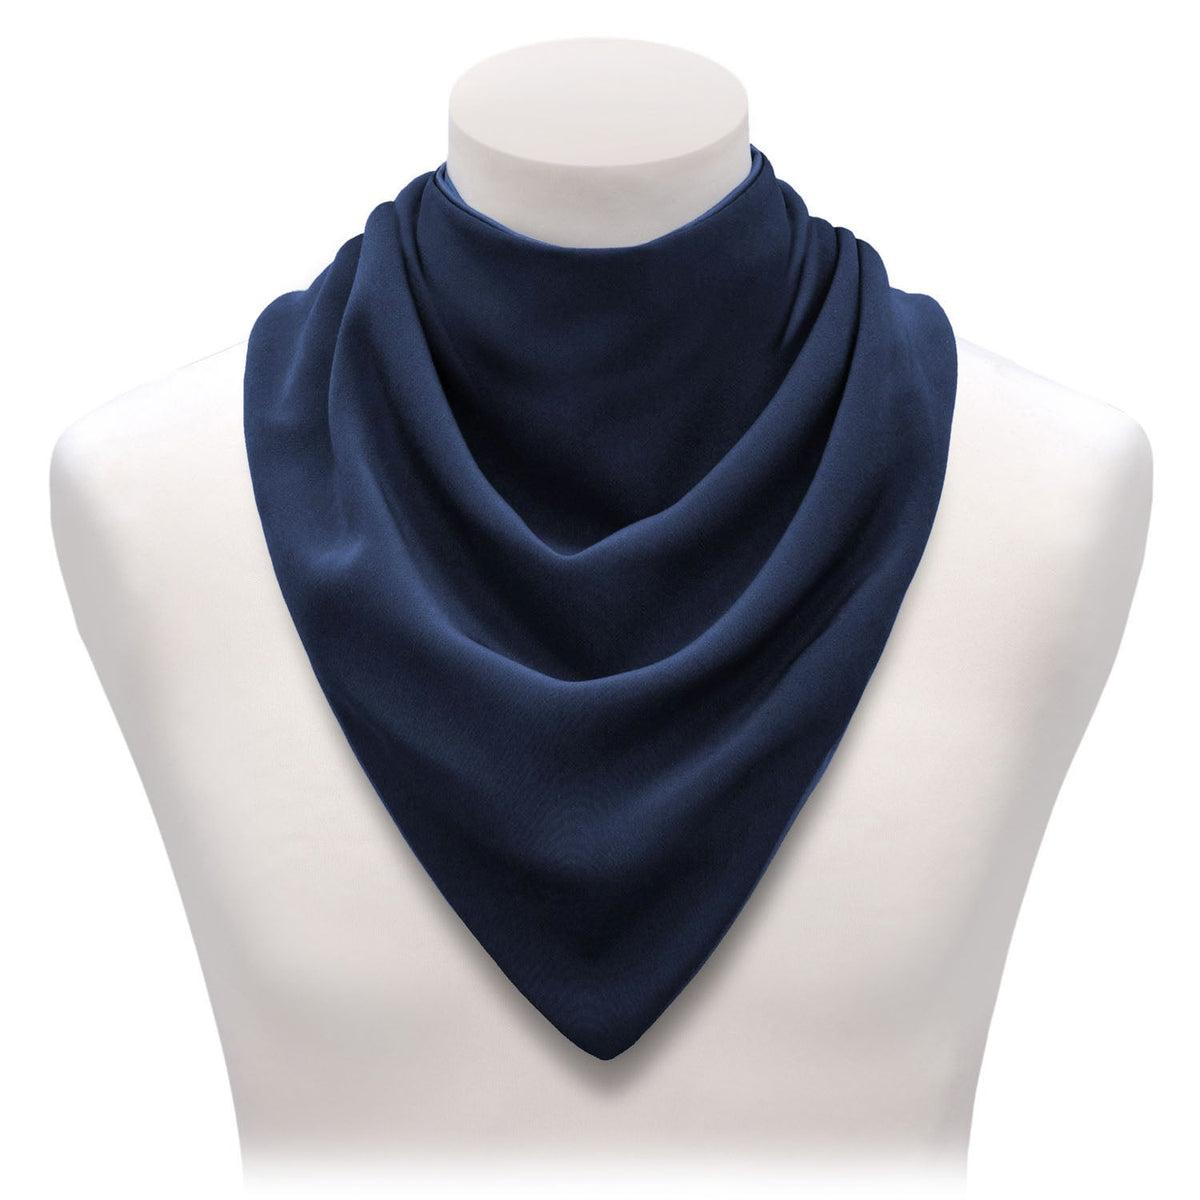 Large neckerchief style dribble bib - Navy (UK VAT Exempt) | Health Care | Care Designs